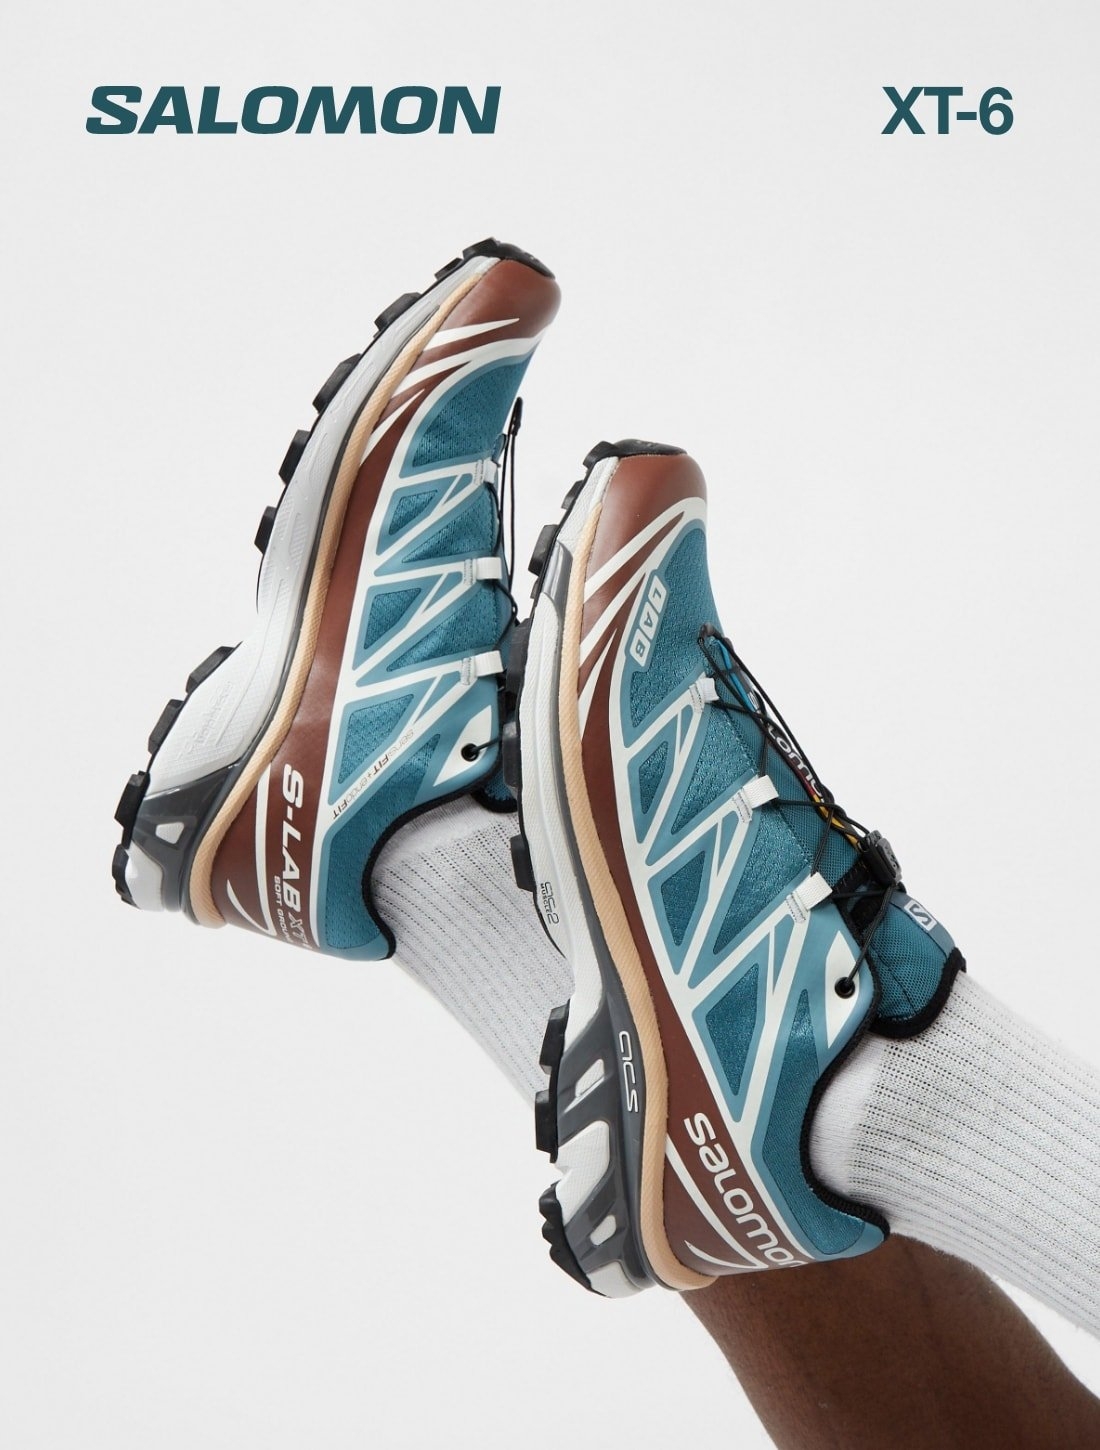  Nike Womens Air Max 270 React Running Trainers CW3094 Sneakers  Shoes (UK 4 US 6.5 EU 37.5, White Racer Blue Flash Crimson 100)